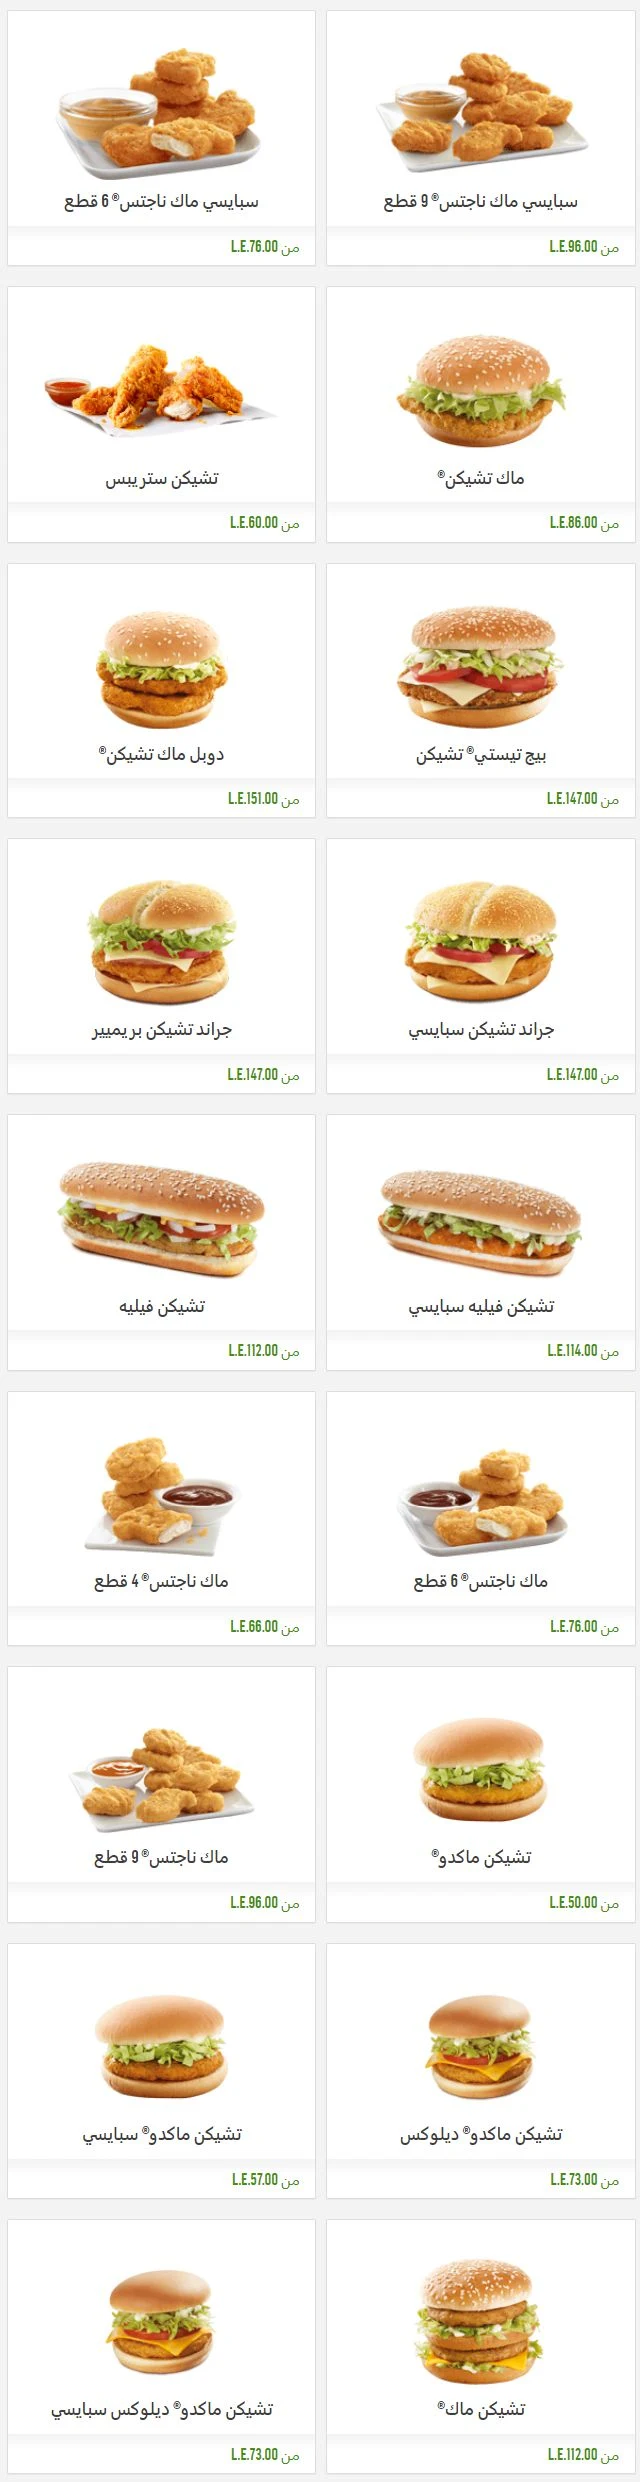 اسعار منيو ماكدونالدز McDonalds مصر , ماك رقم تليفون ودليفري